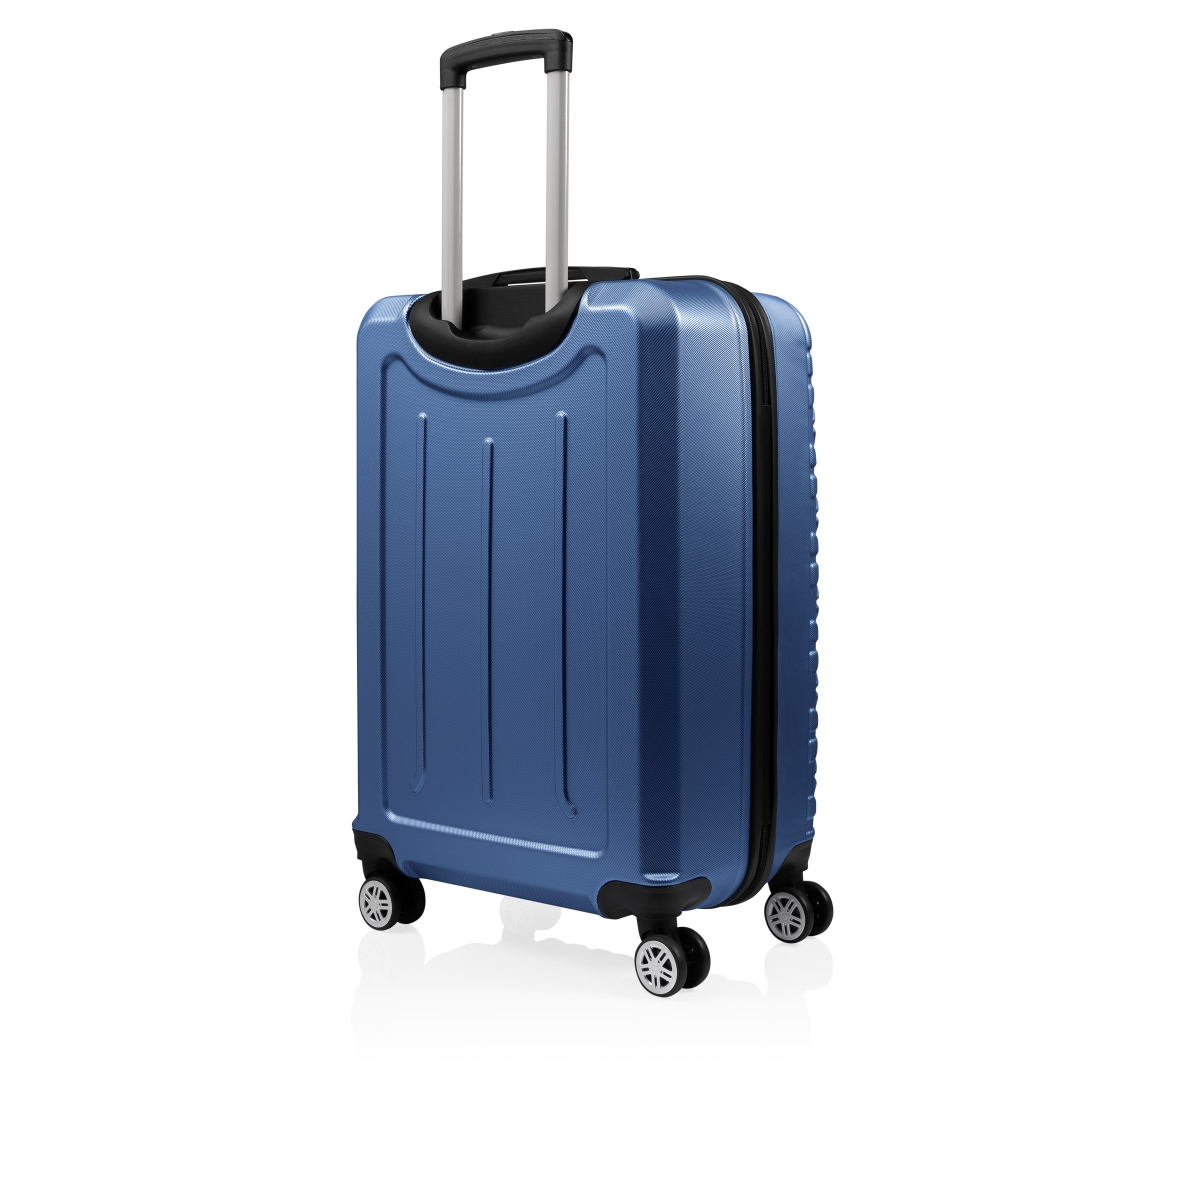 Gedox Abs 3'lü Valiz Seyahat Seti - Model:800.05 Çivit Mavi